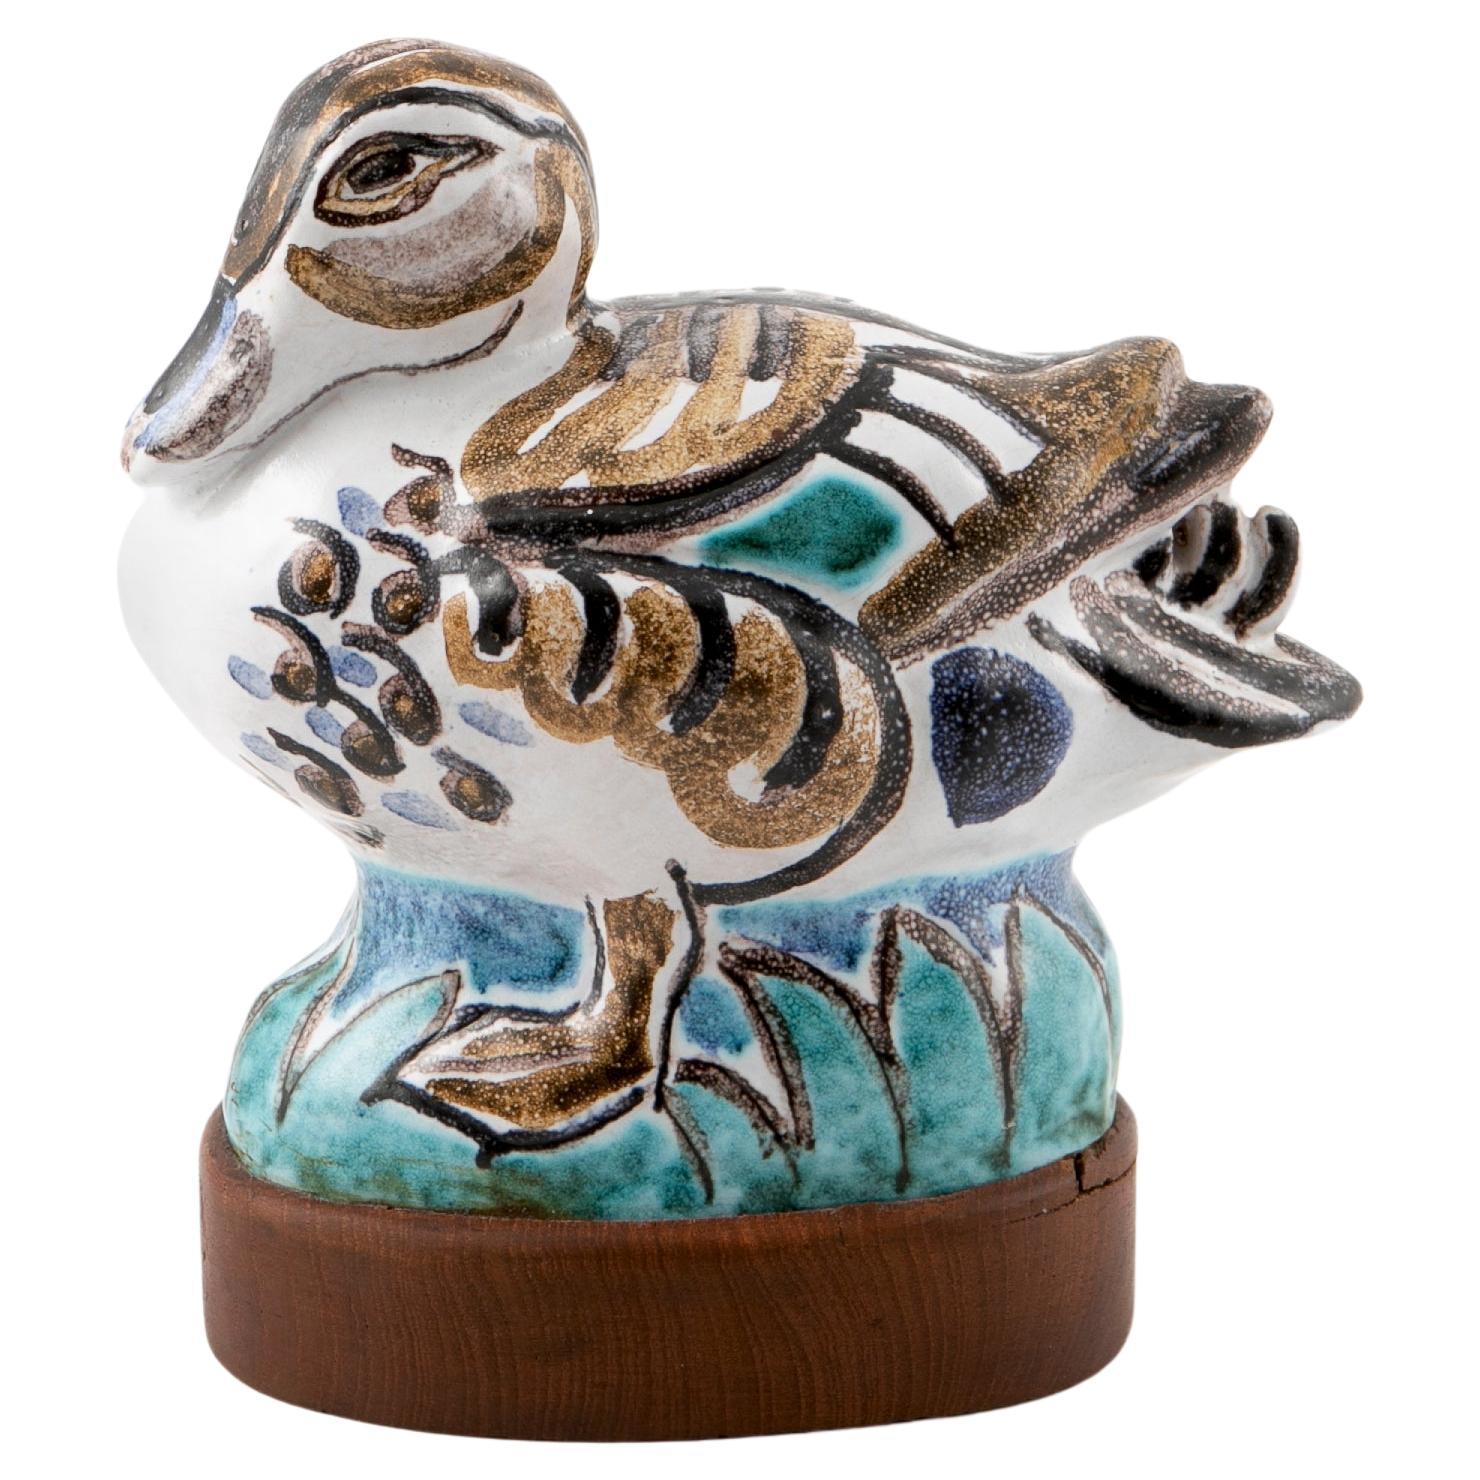 Knud Kyhn Ceramic Duck